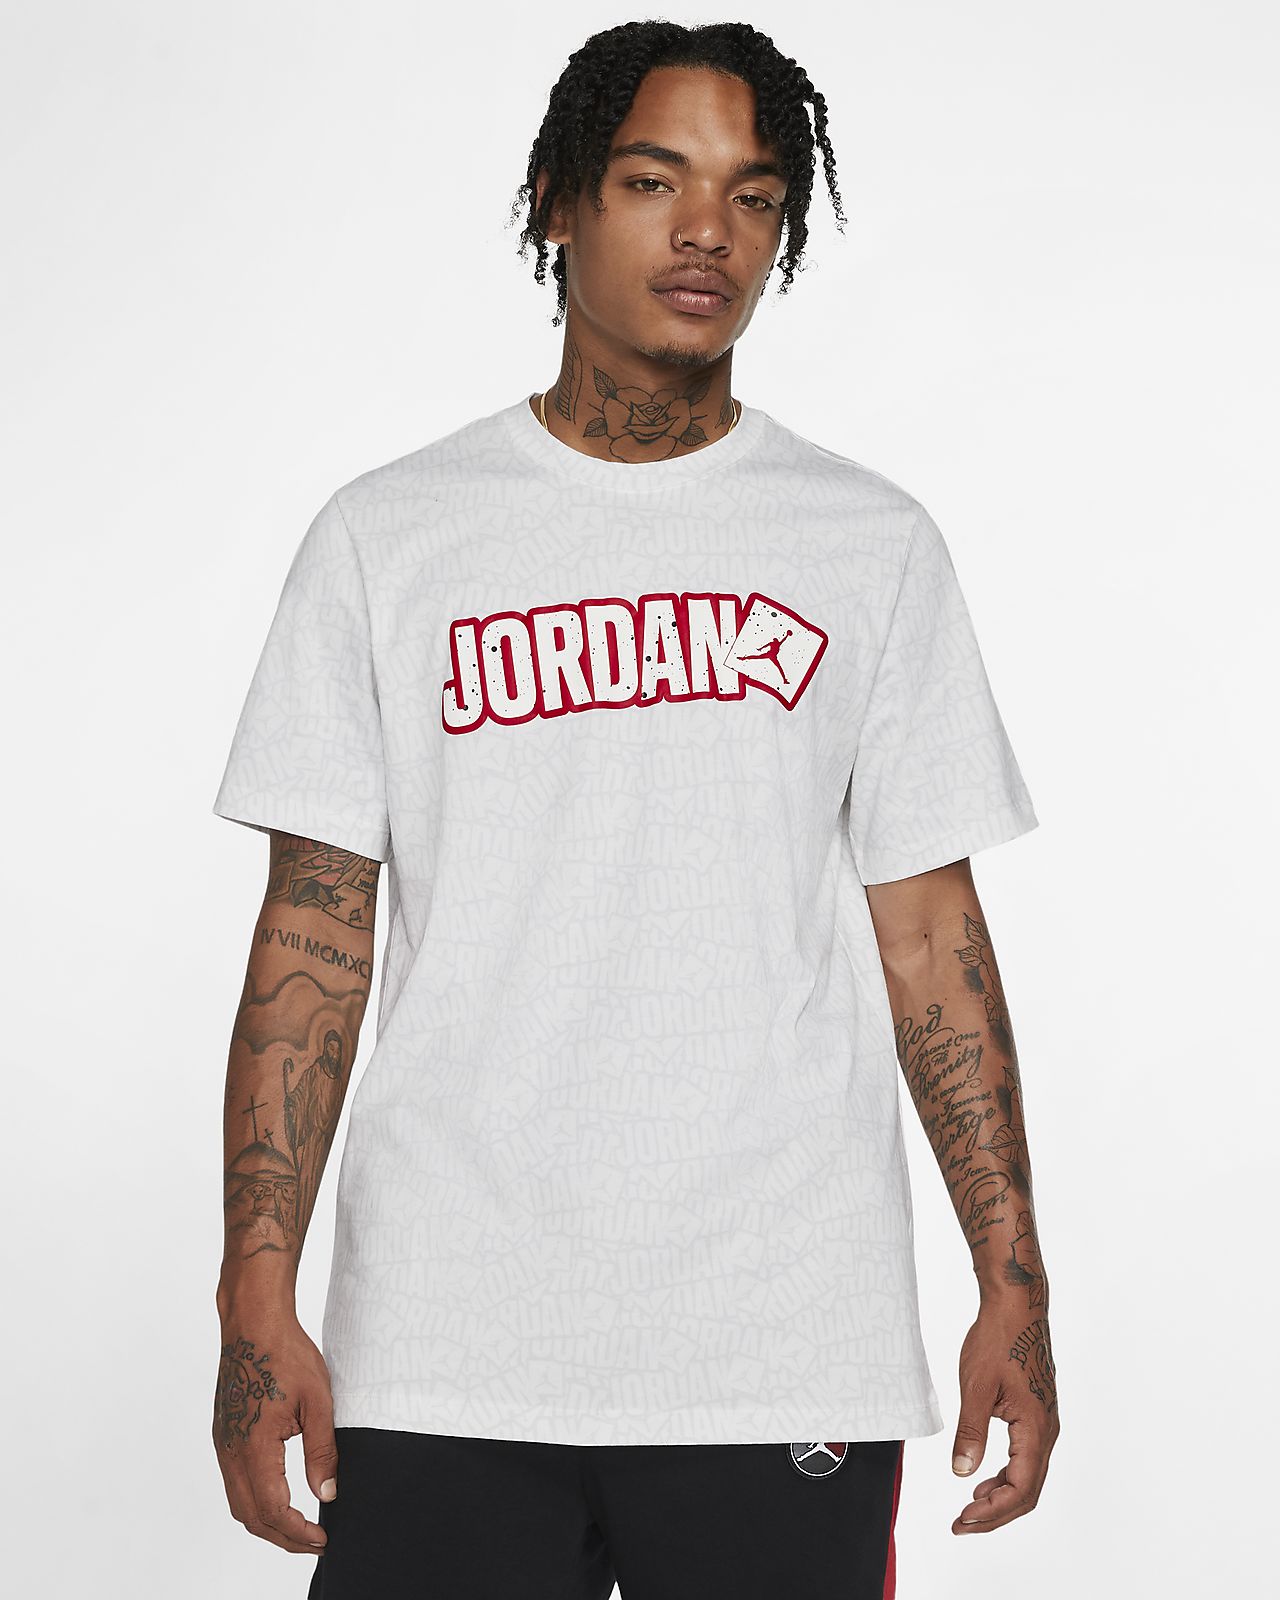 jordan tee shirts cheap